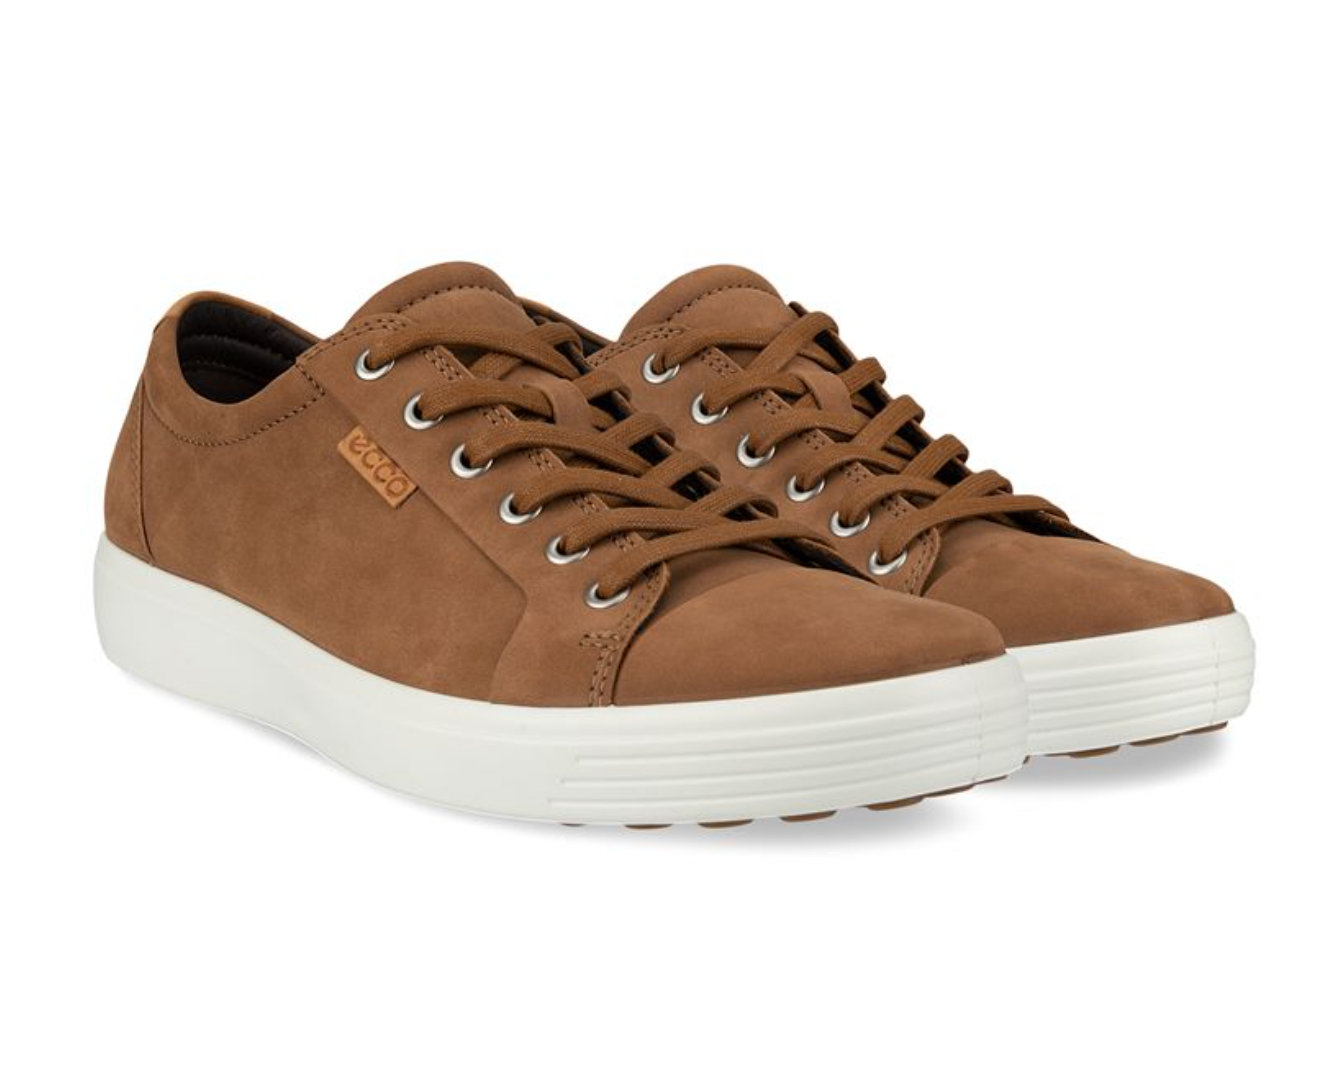 ECCO Men's Soft 7 Sneaker - Brown